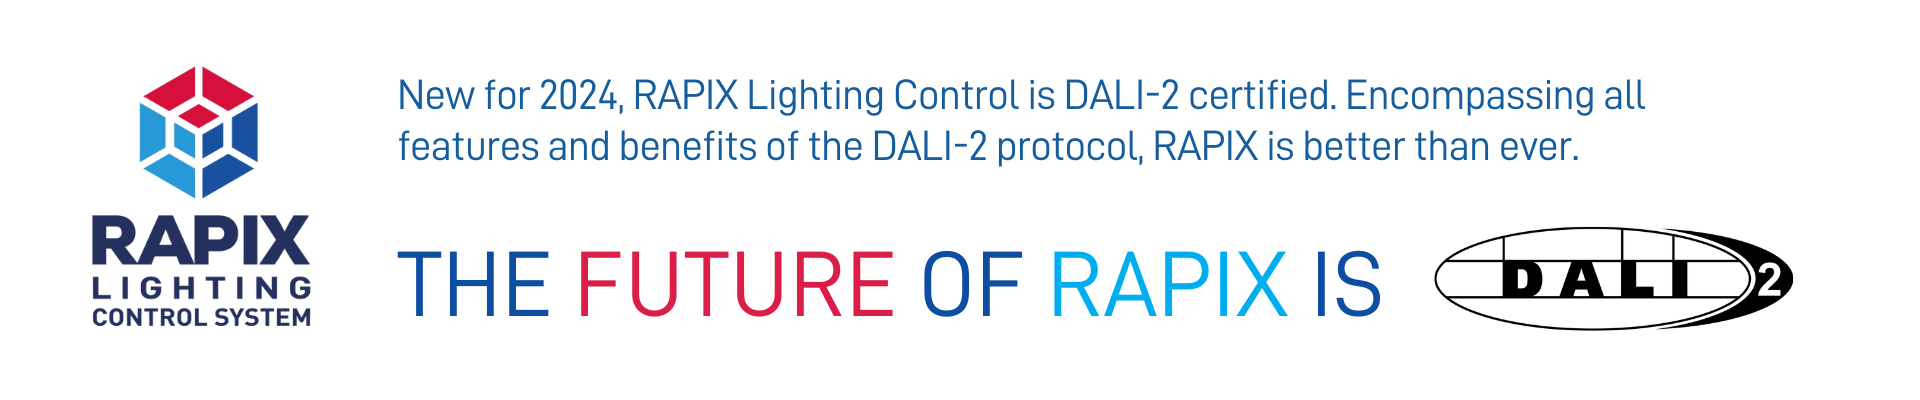 Future of RAPIX is DALI-2